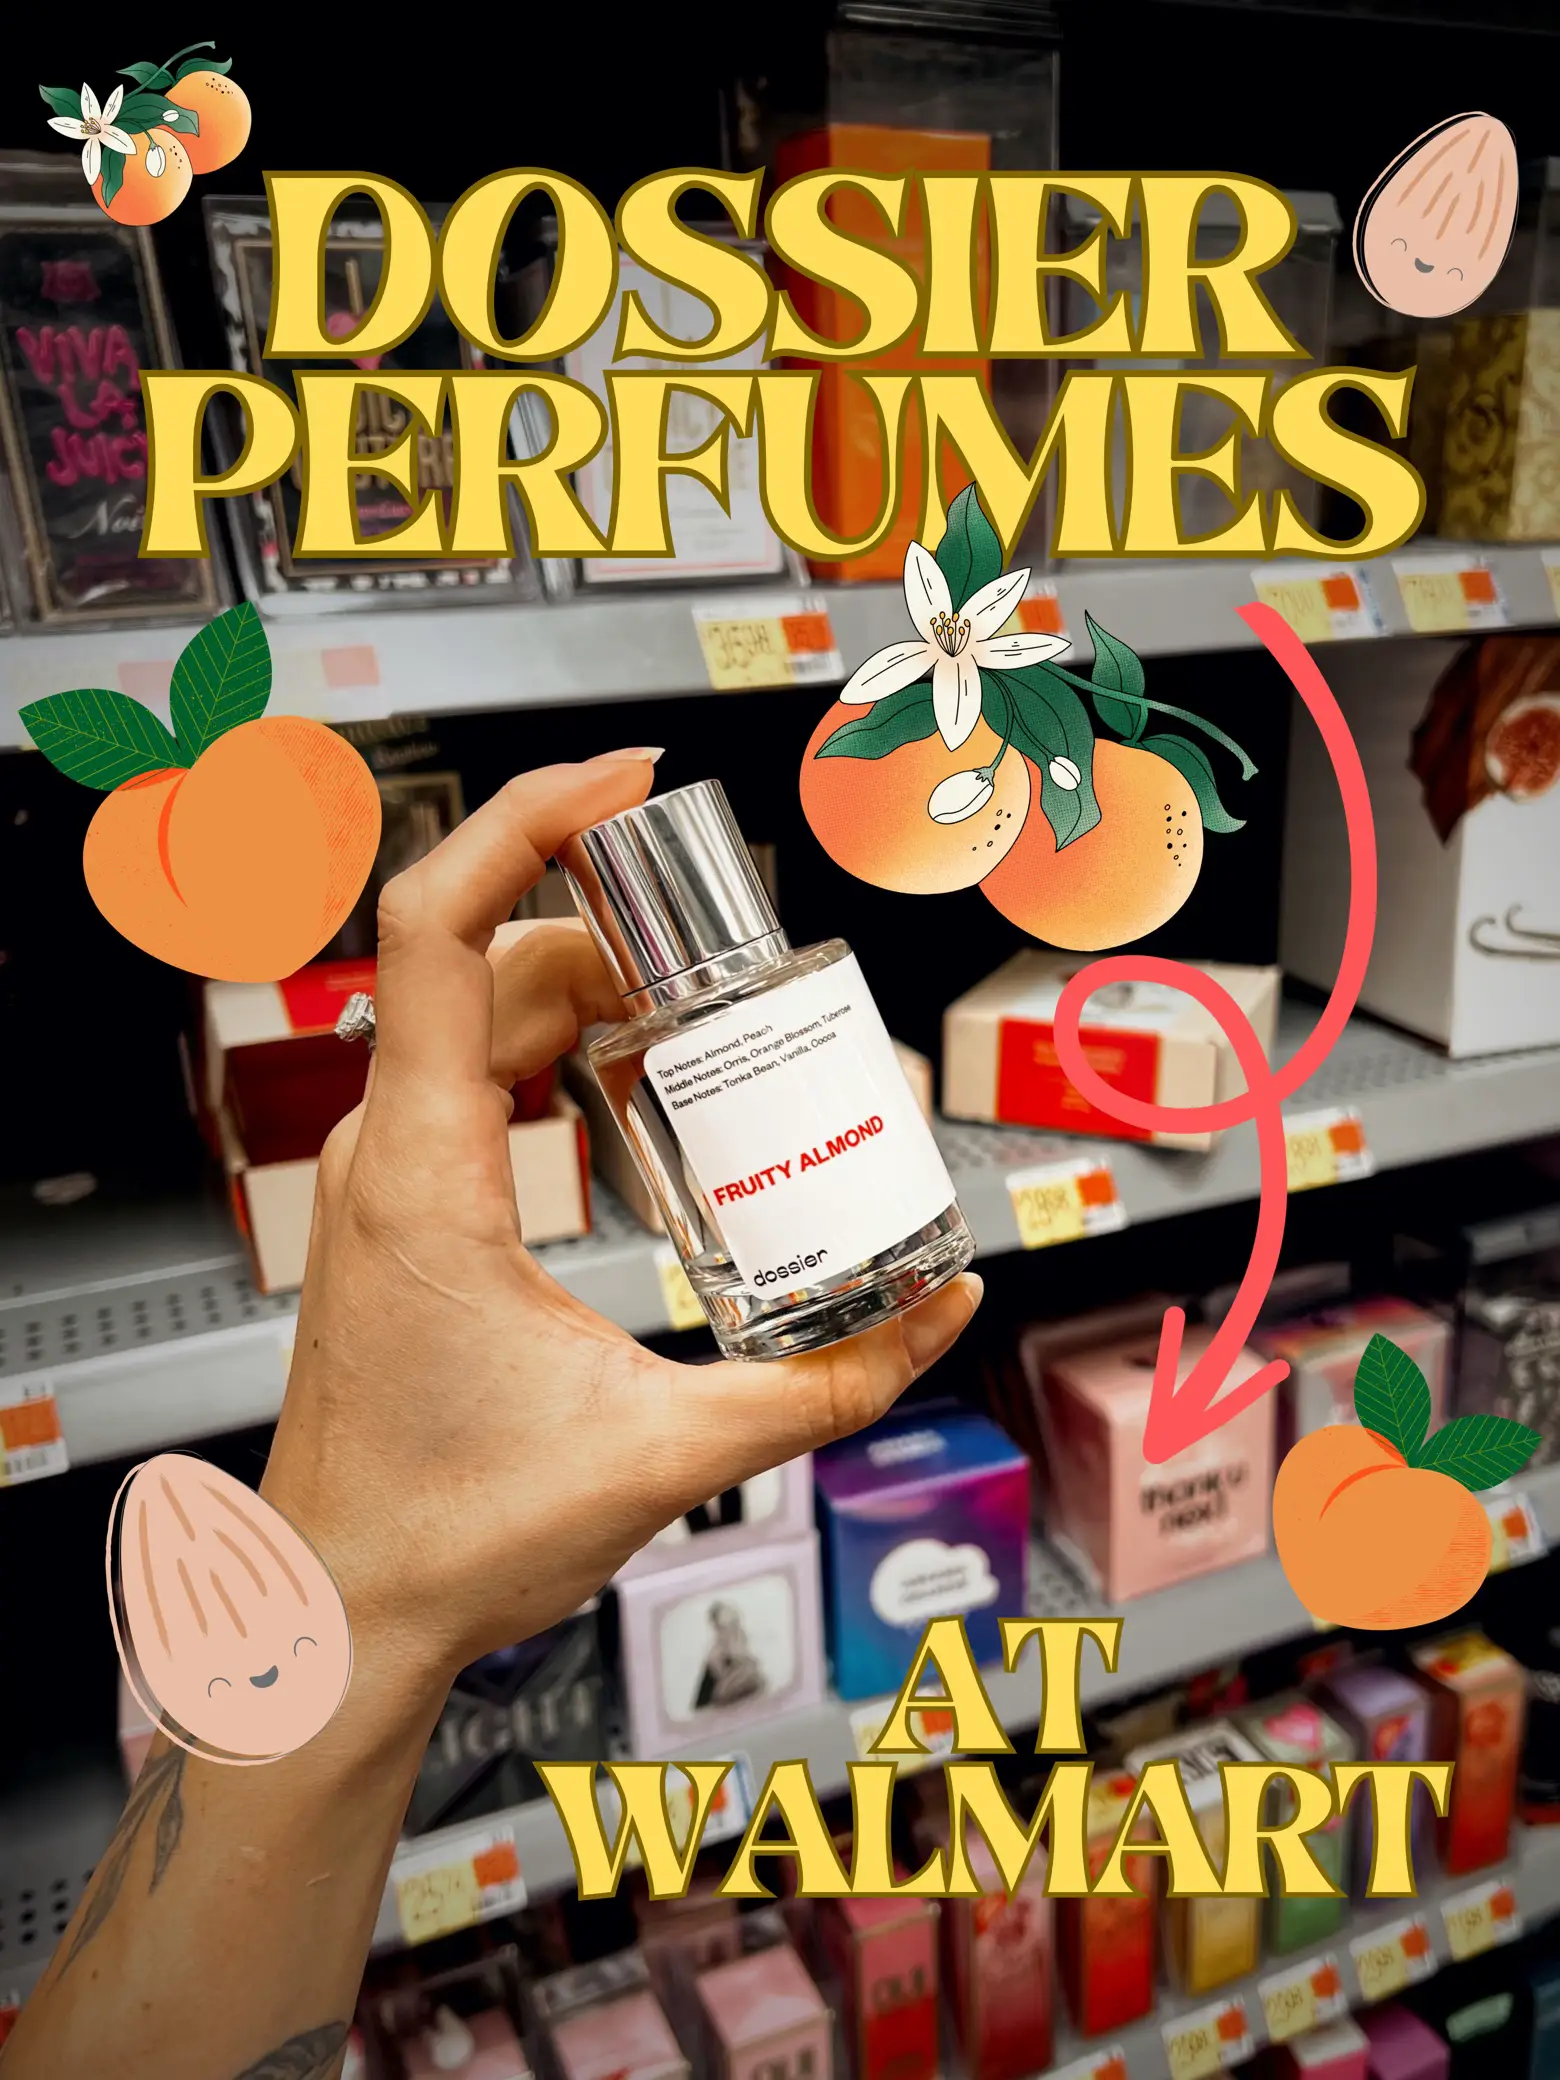 Carolina Herrera's Good Girl Dupe Perfume: Fruity Almond - Dossier